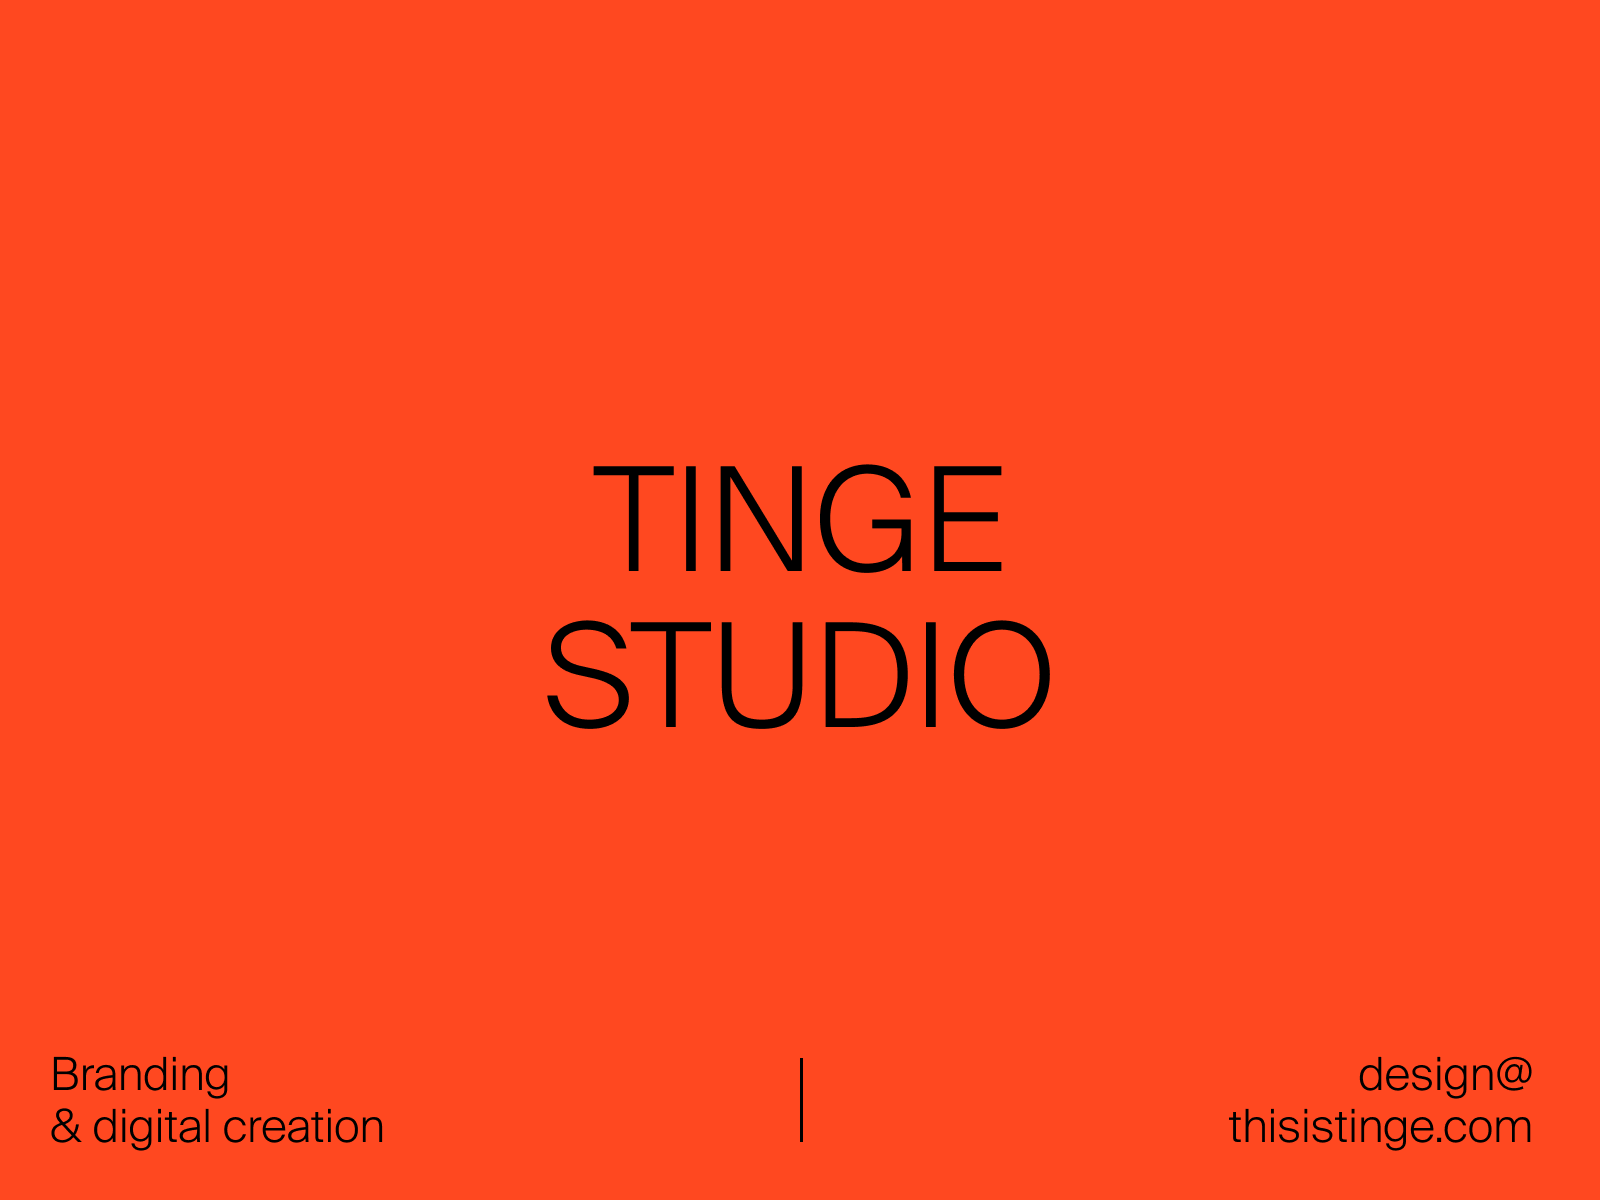 TINGE STUDIO